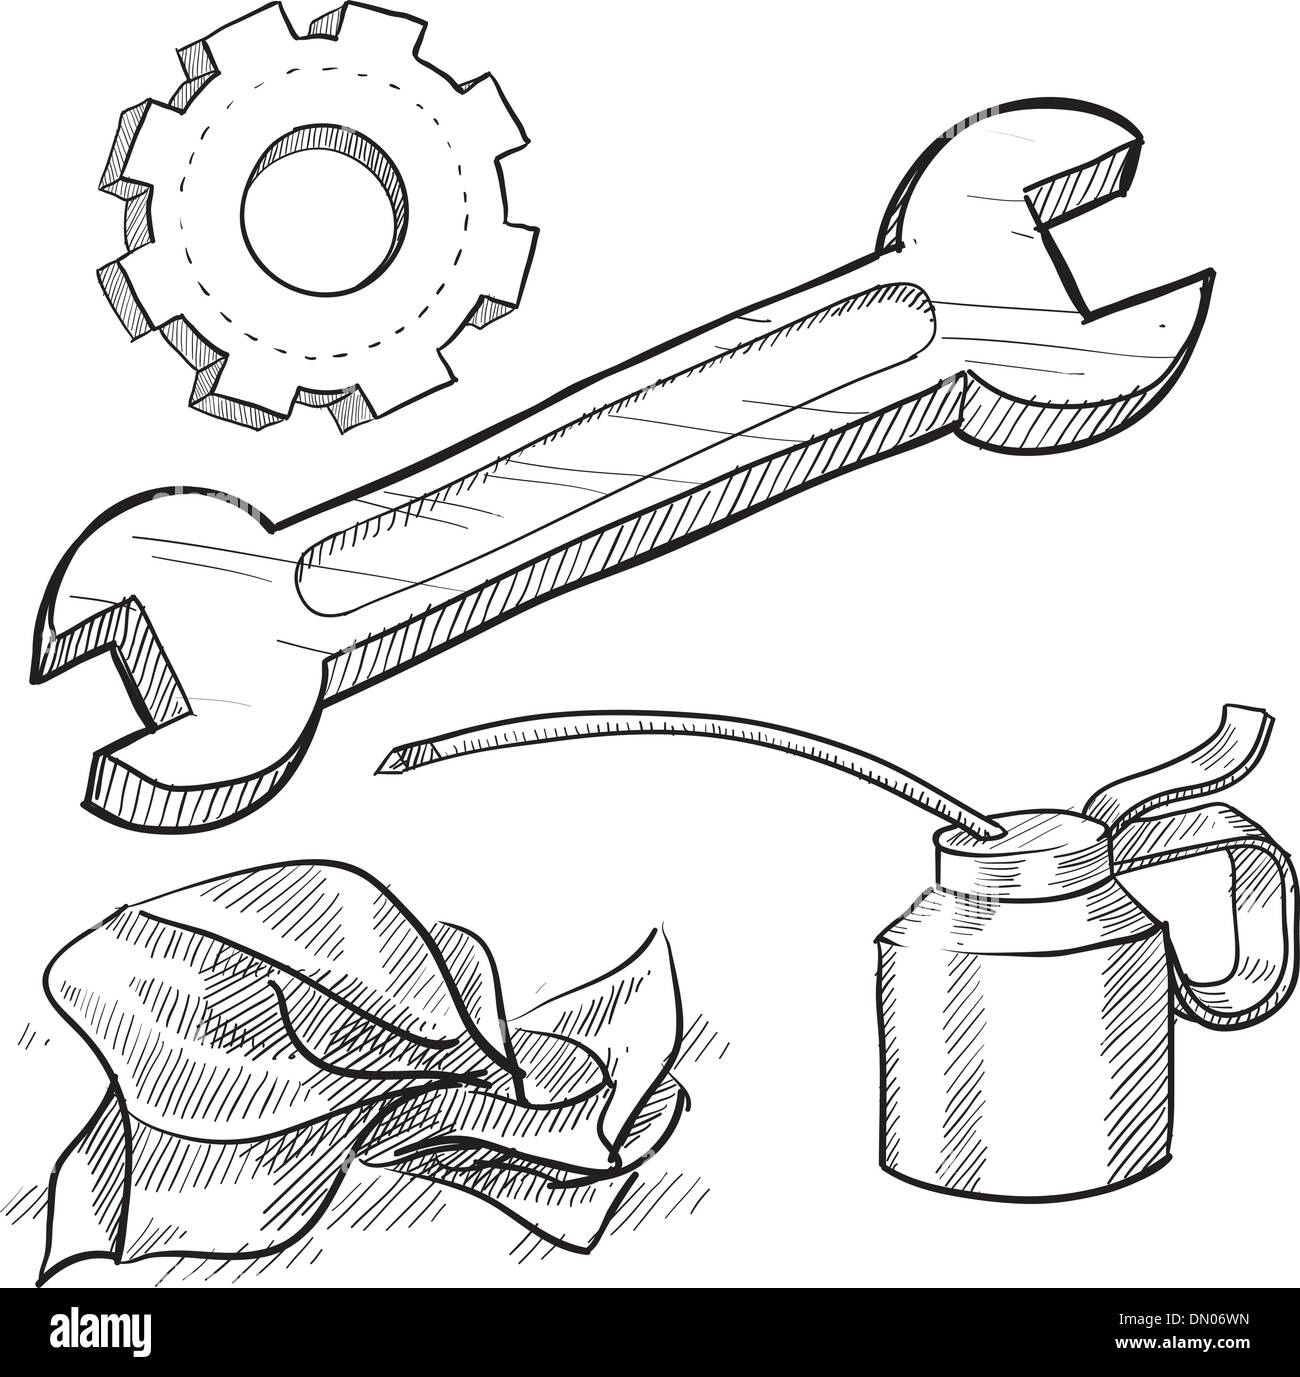 auto mechanic drawing